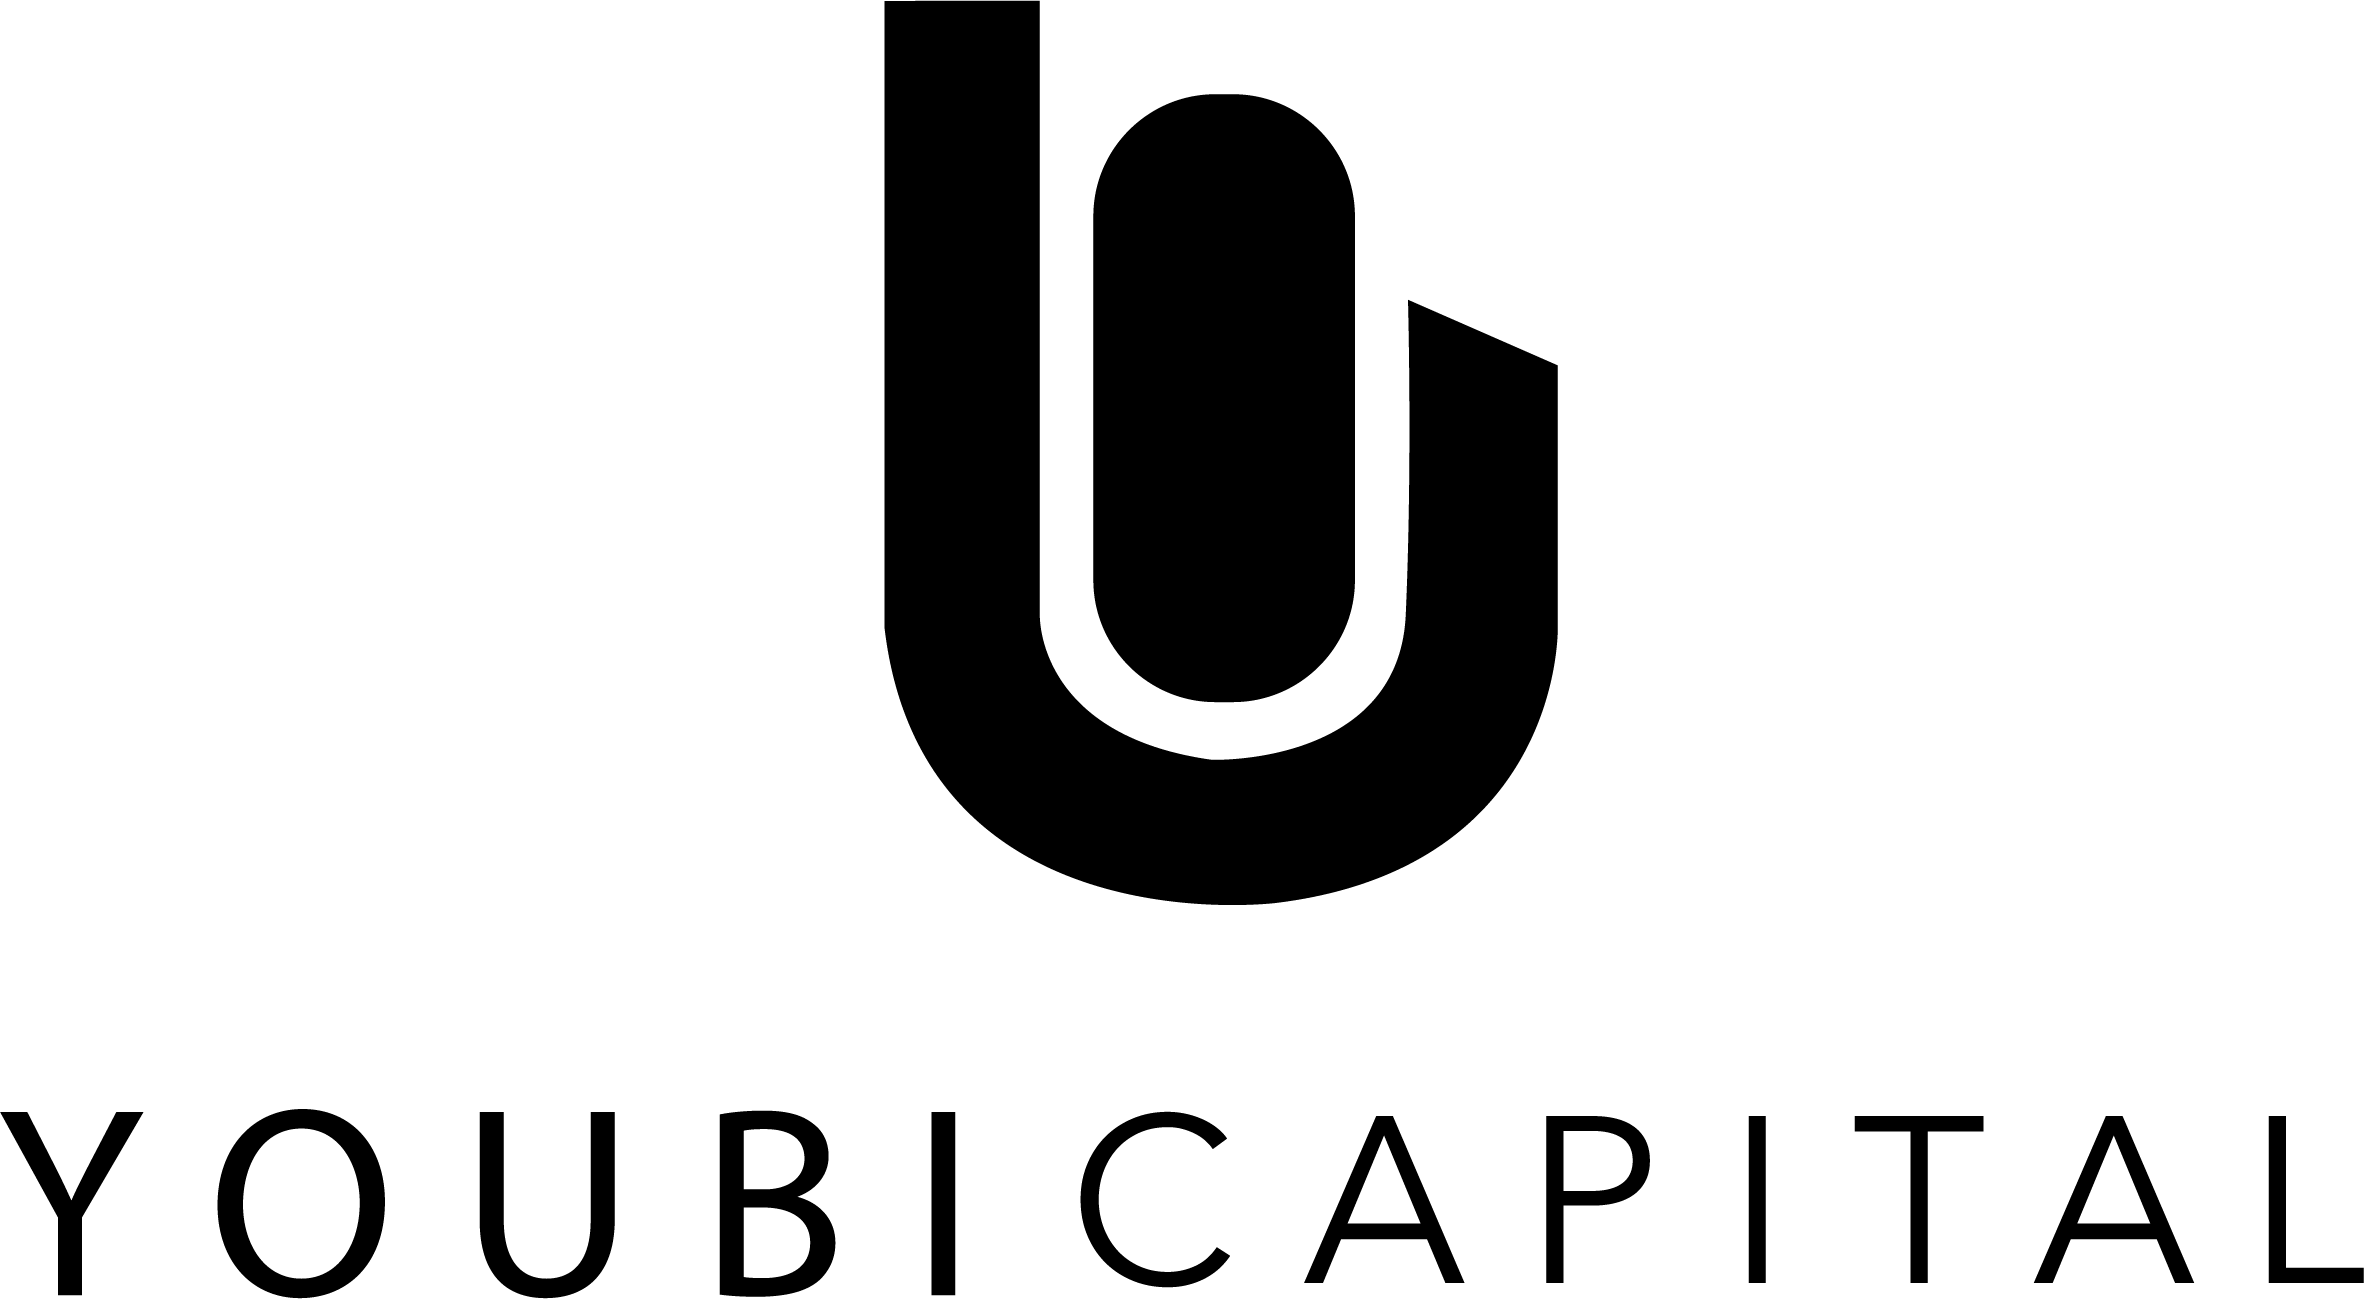 Youbi Capital Logo